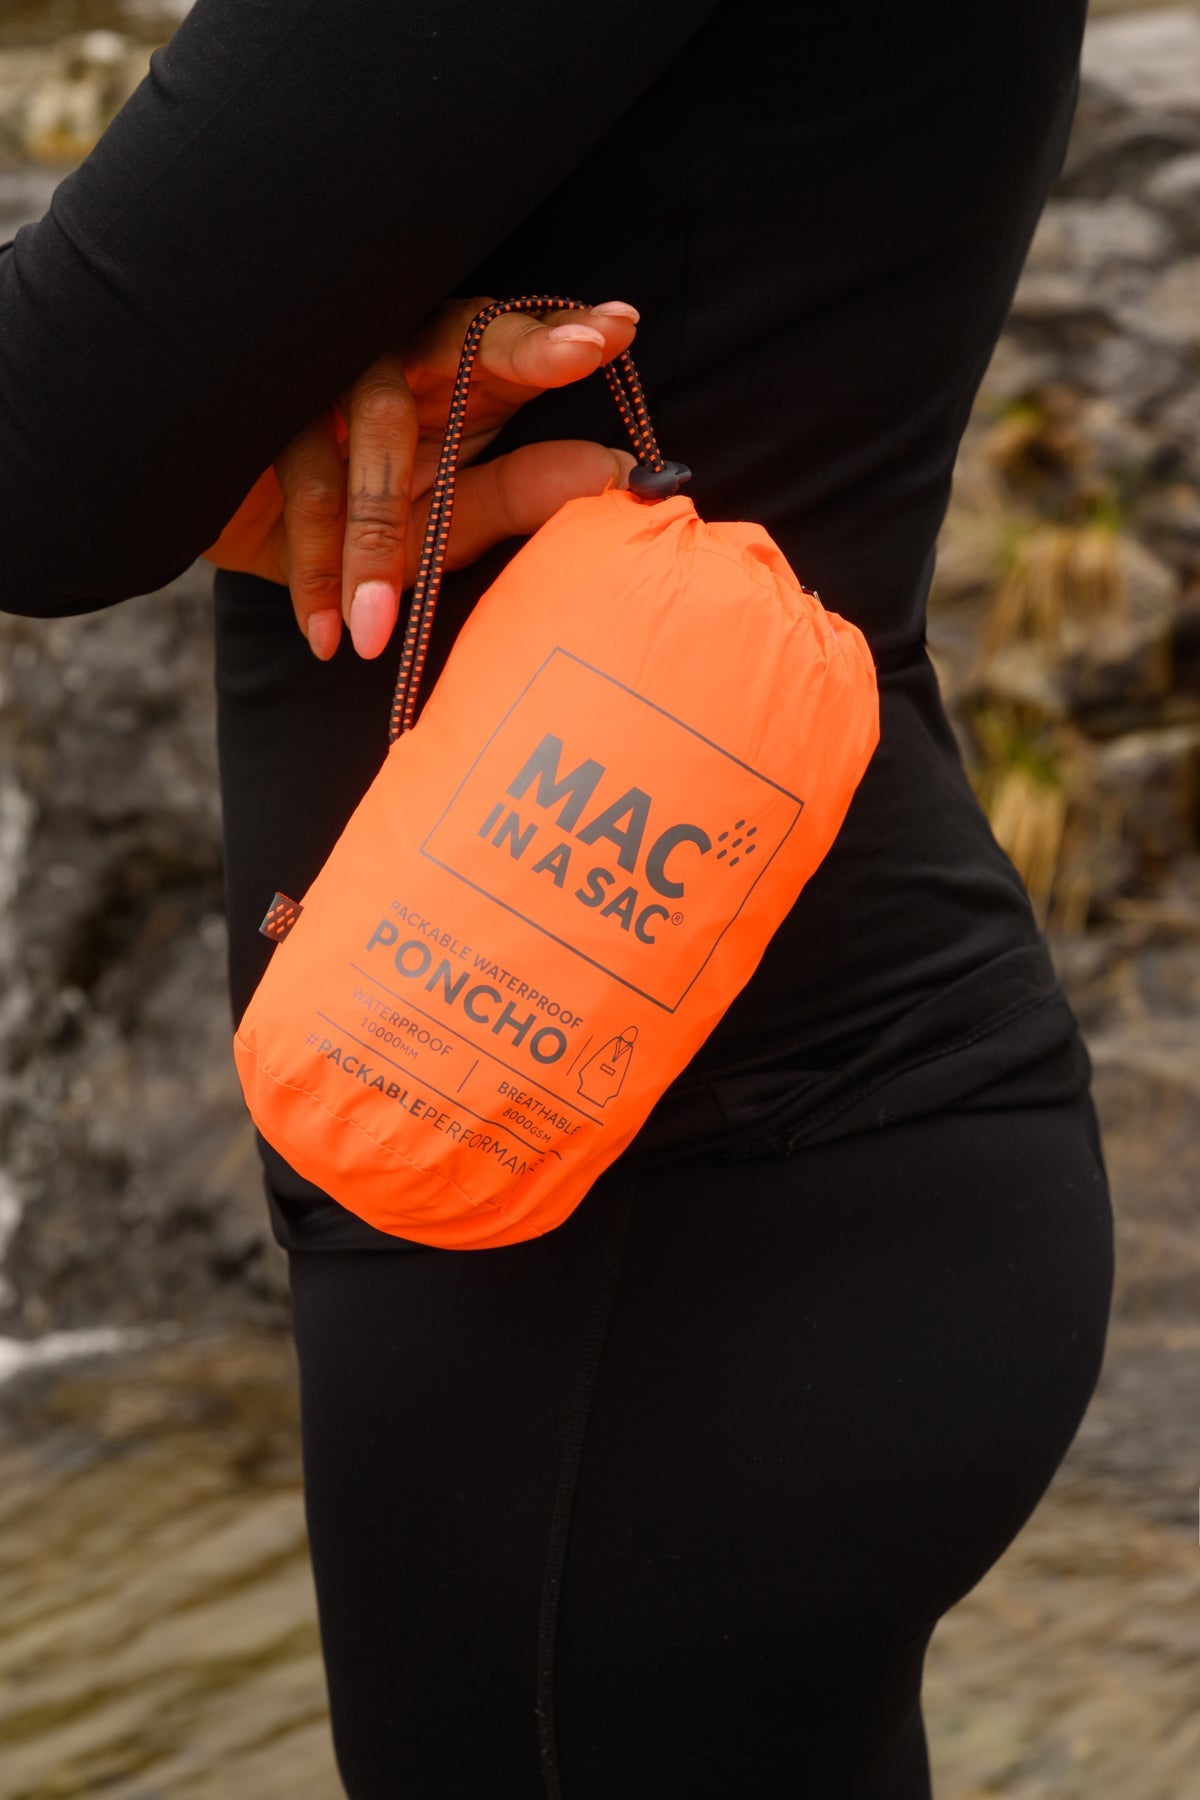 Poncho Packable Waterproof Cape - Neon Orange